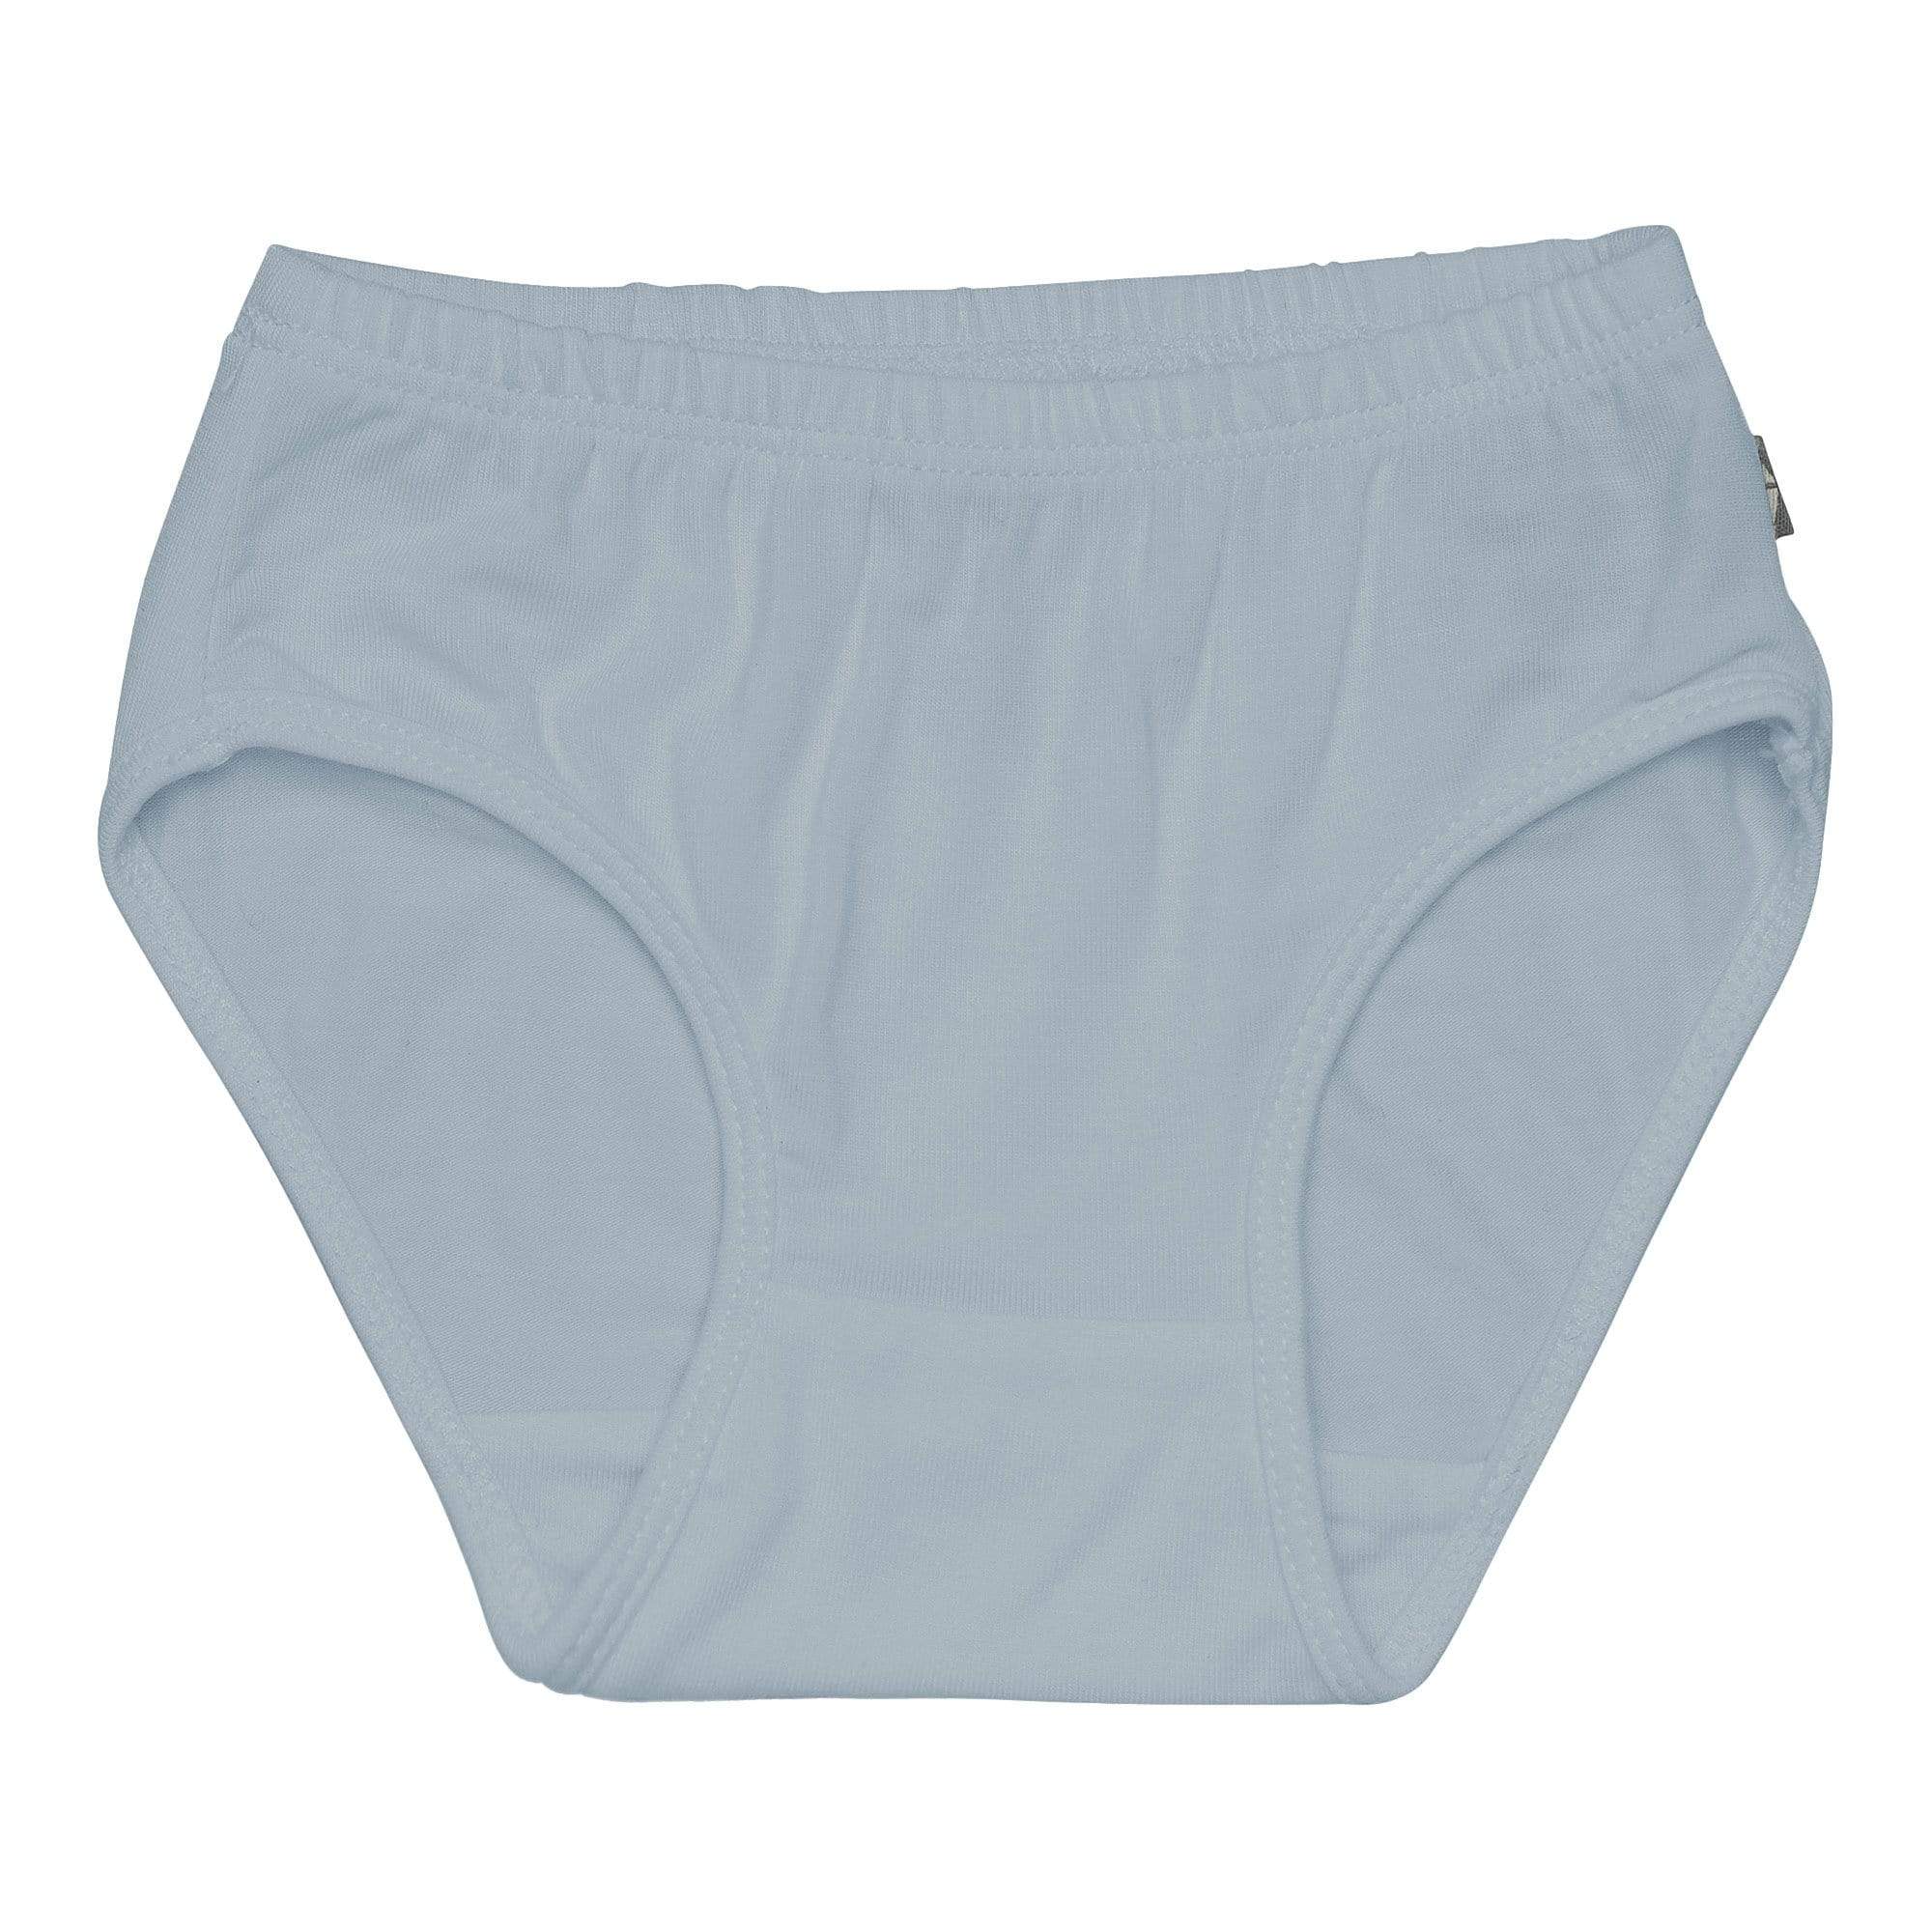 Roslyn_WeberTEx on X: Orinery Baby Kids Underwear Breathable Cotton  Panties Toddler Girls Undies Soft Assorted Briefs 6-Pack SICKL2X    / X